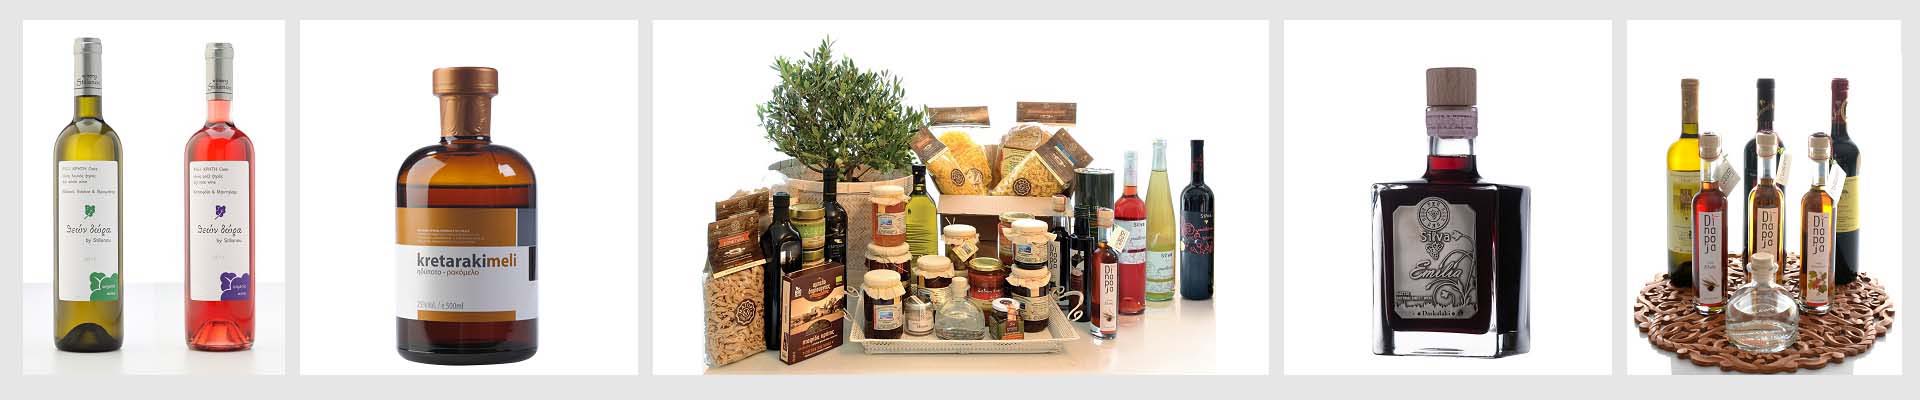 Cretan Products, Cretan Gifts, Tsikoudia raki sariki honey traditional products goods from the island of Crete, mycretangoods